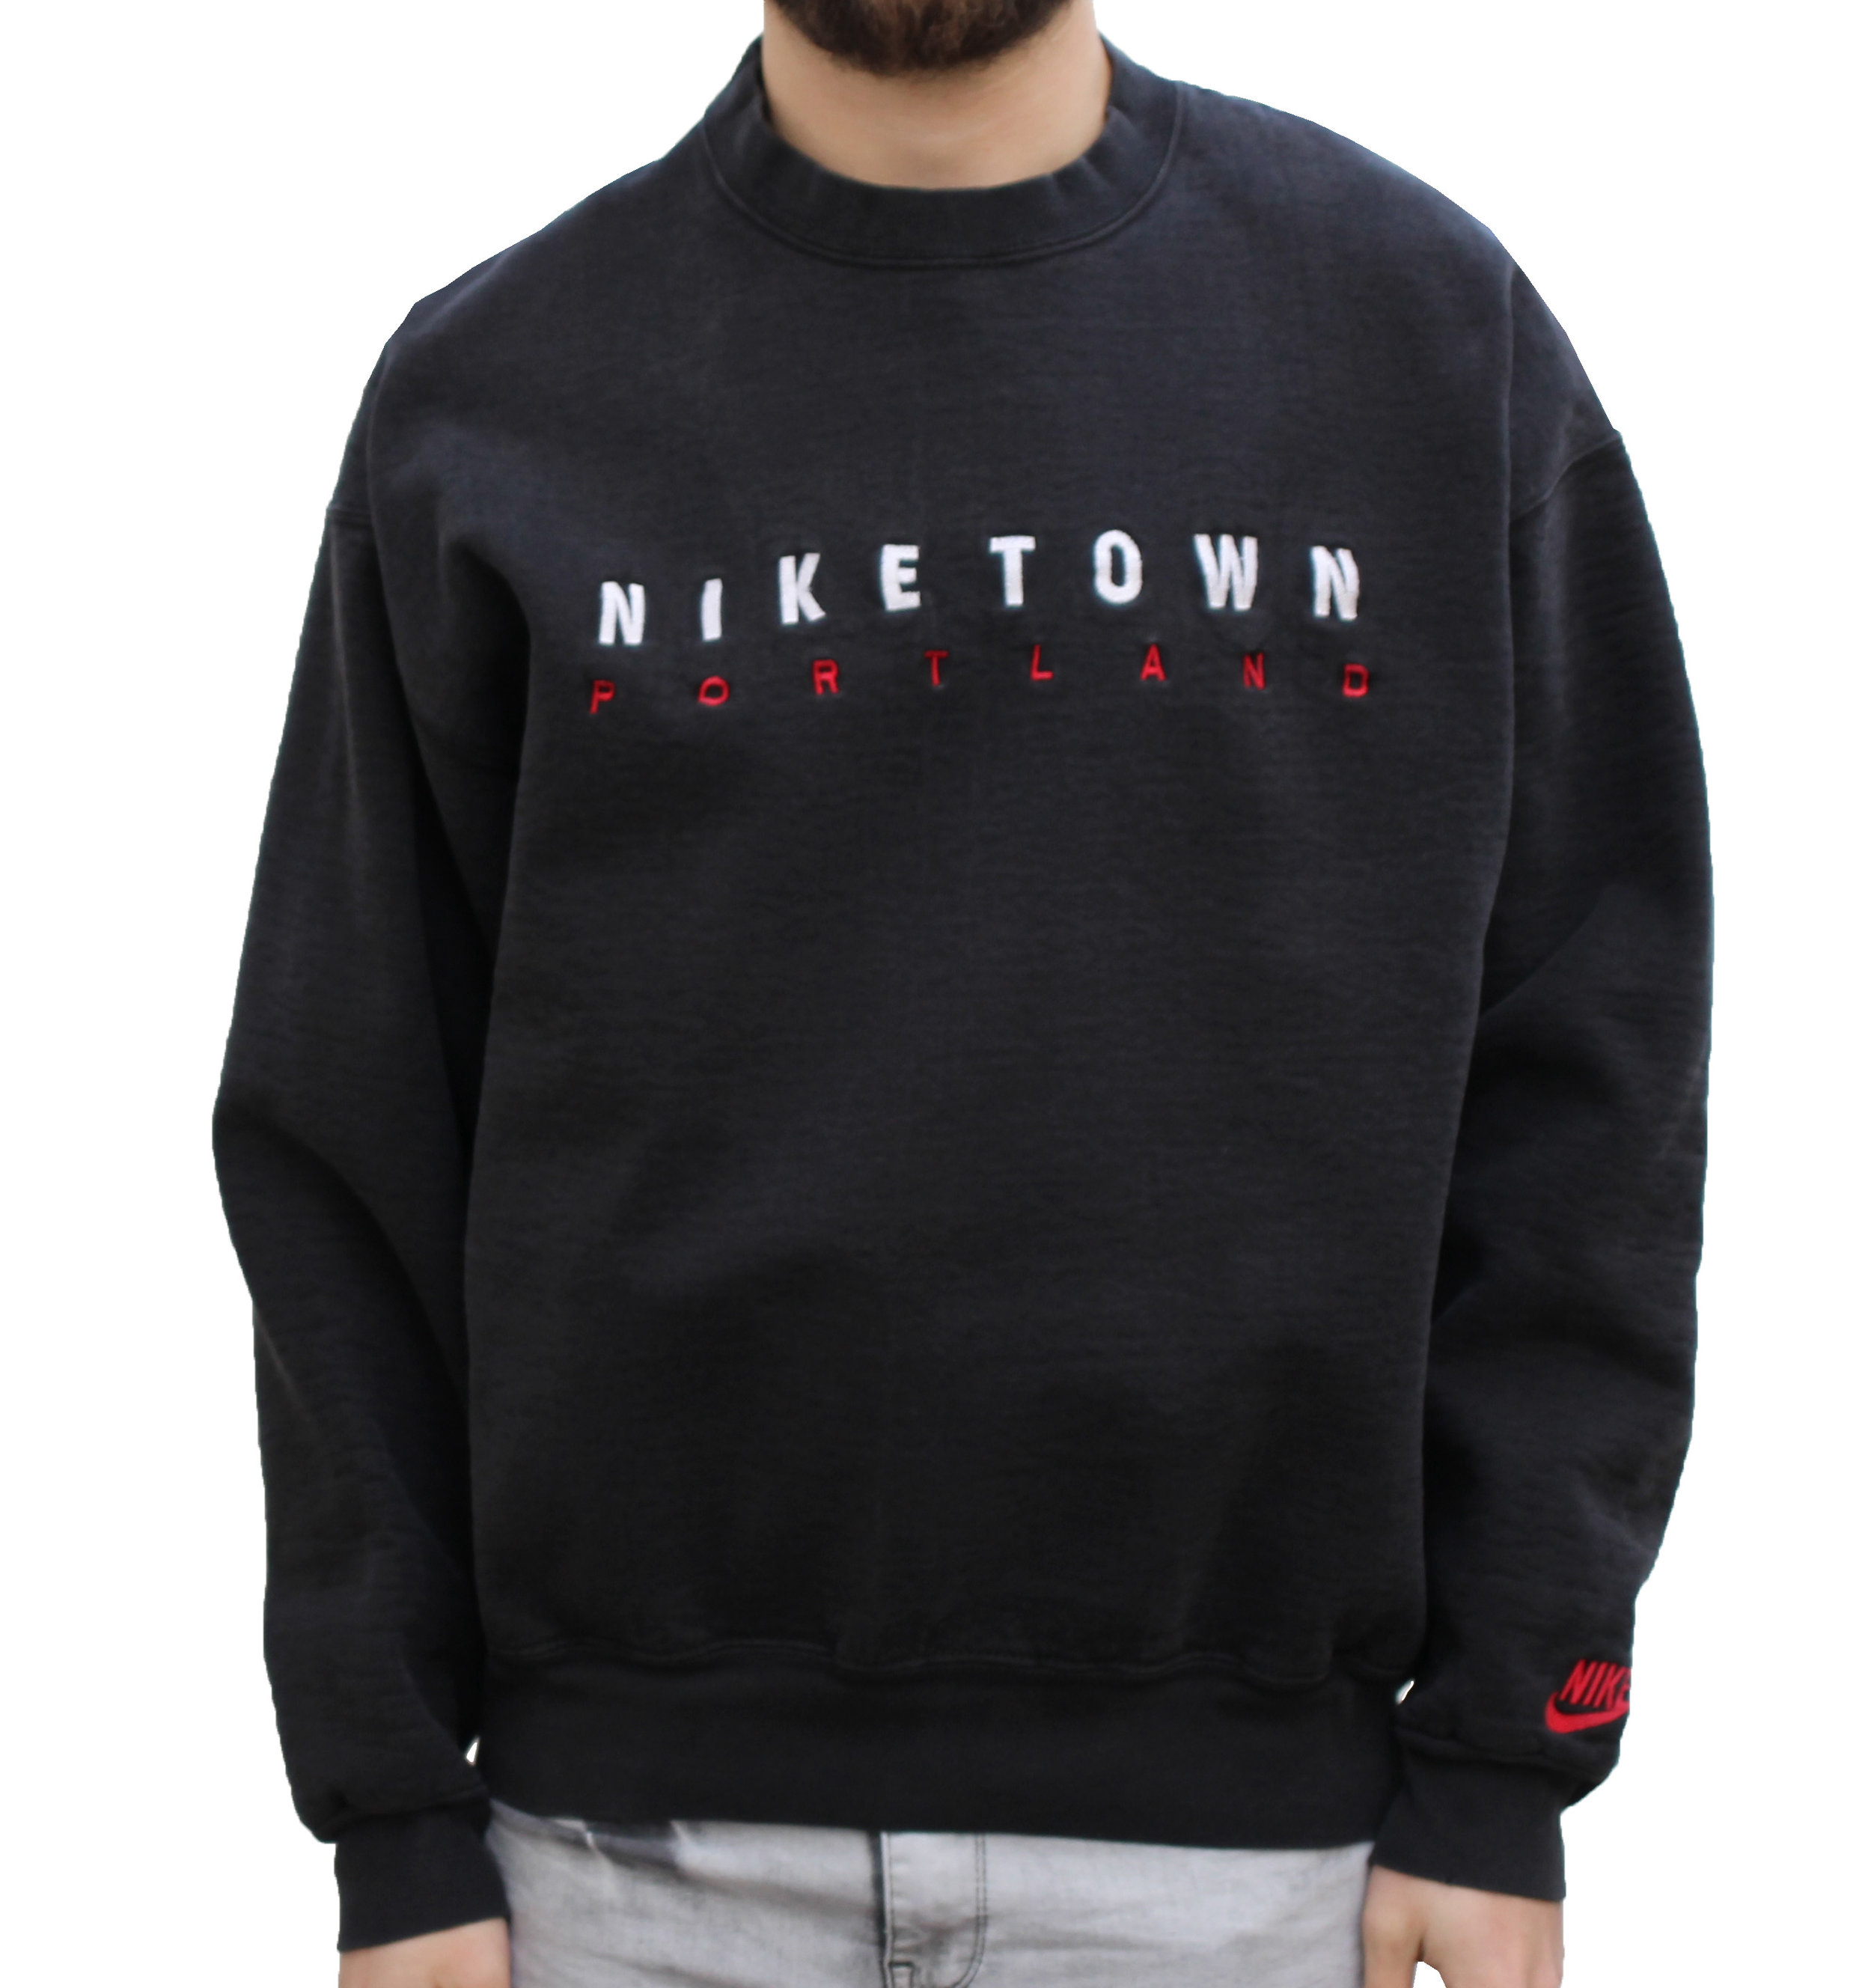 nike town sweatshirt